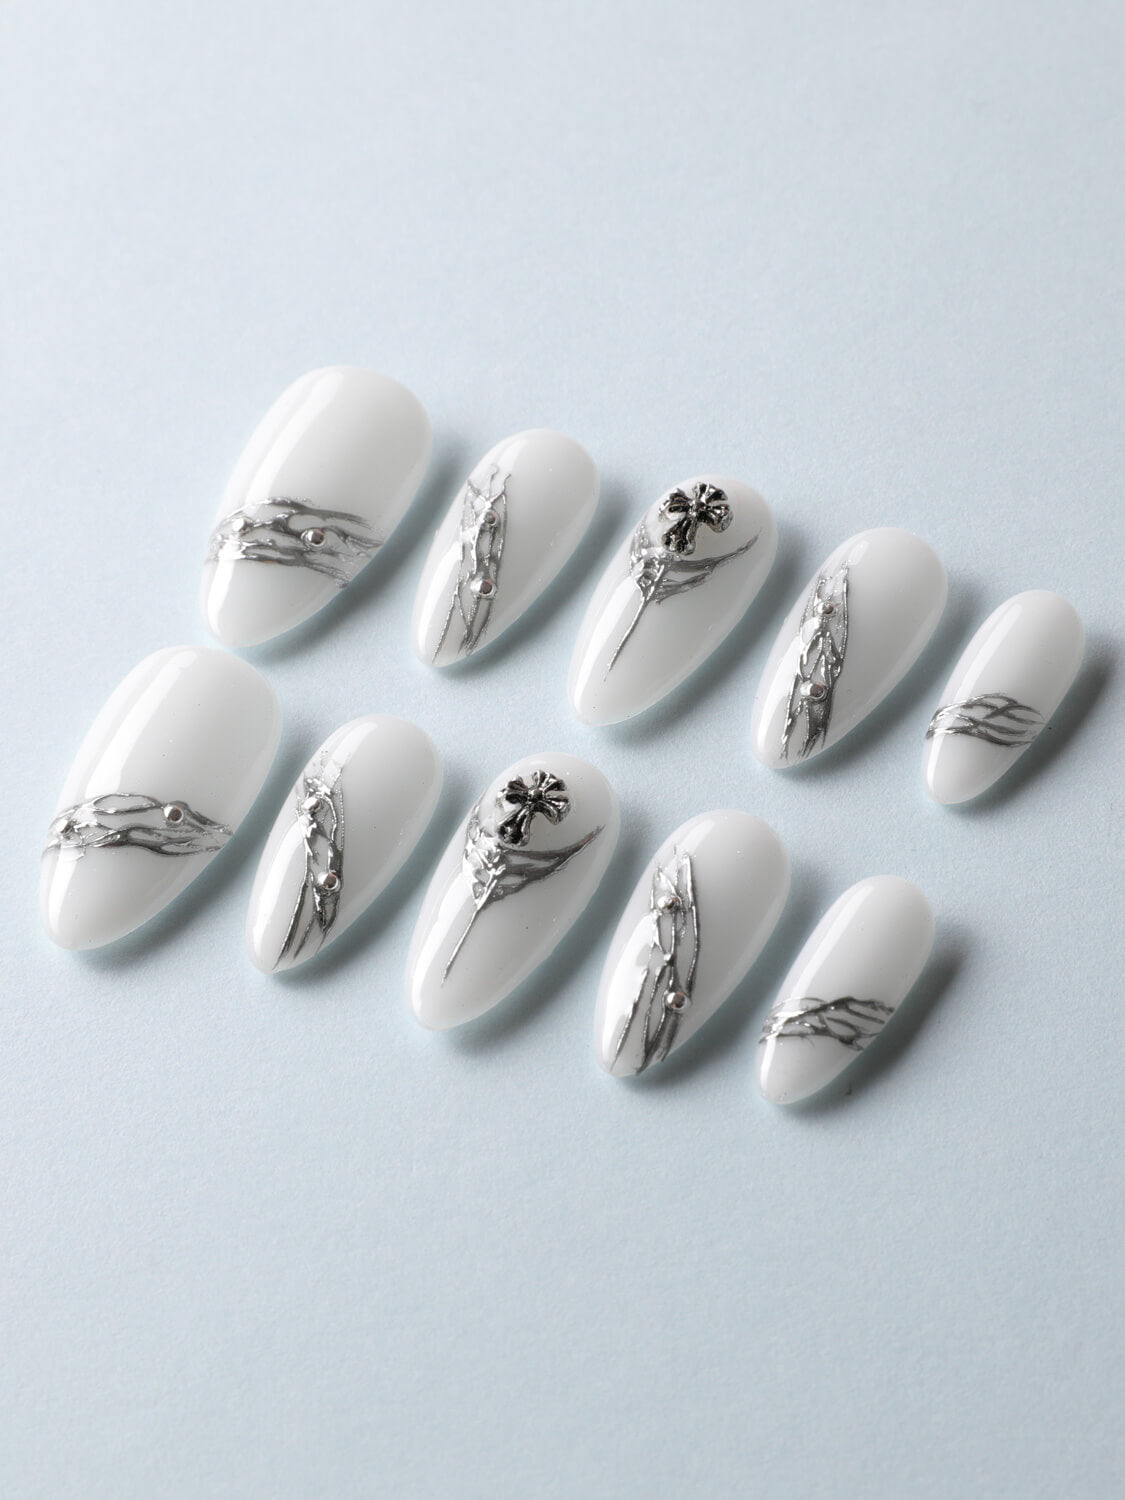 Metallic Patterned White Nails